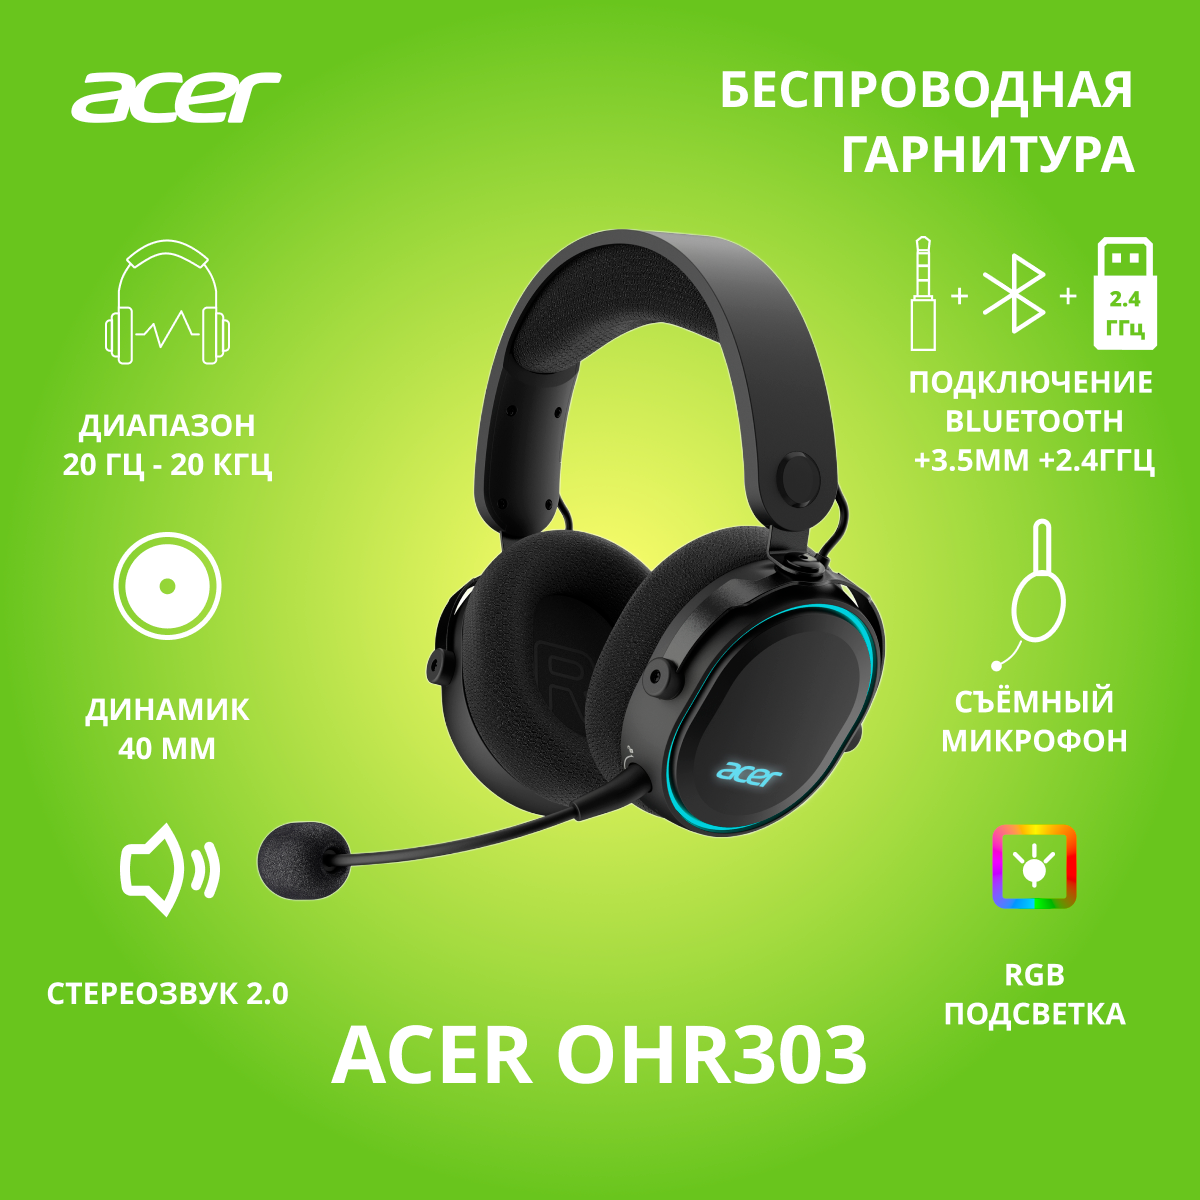 Гарнитура Acer OHR303, черный (zl. hdsee.009)